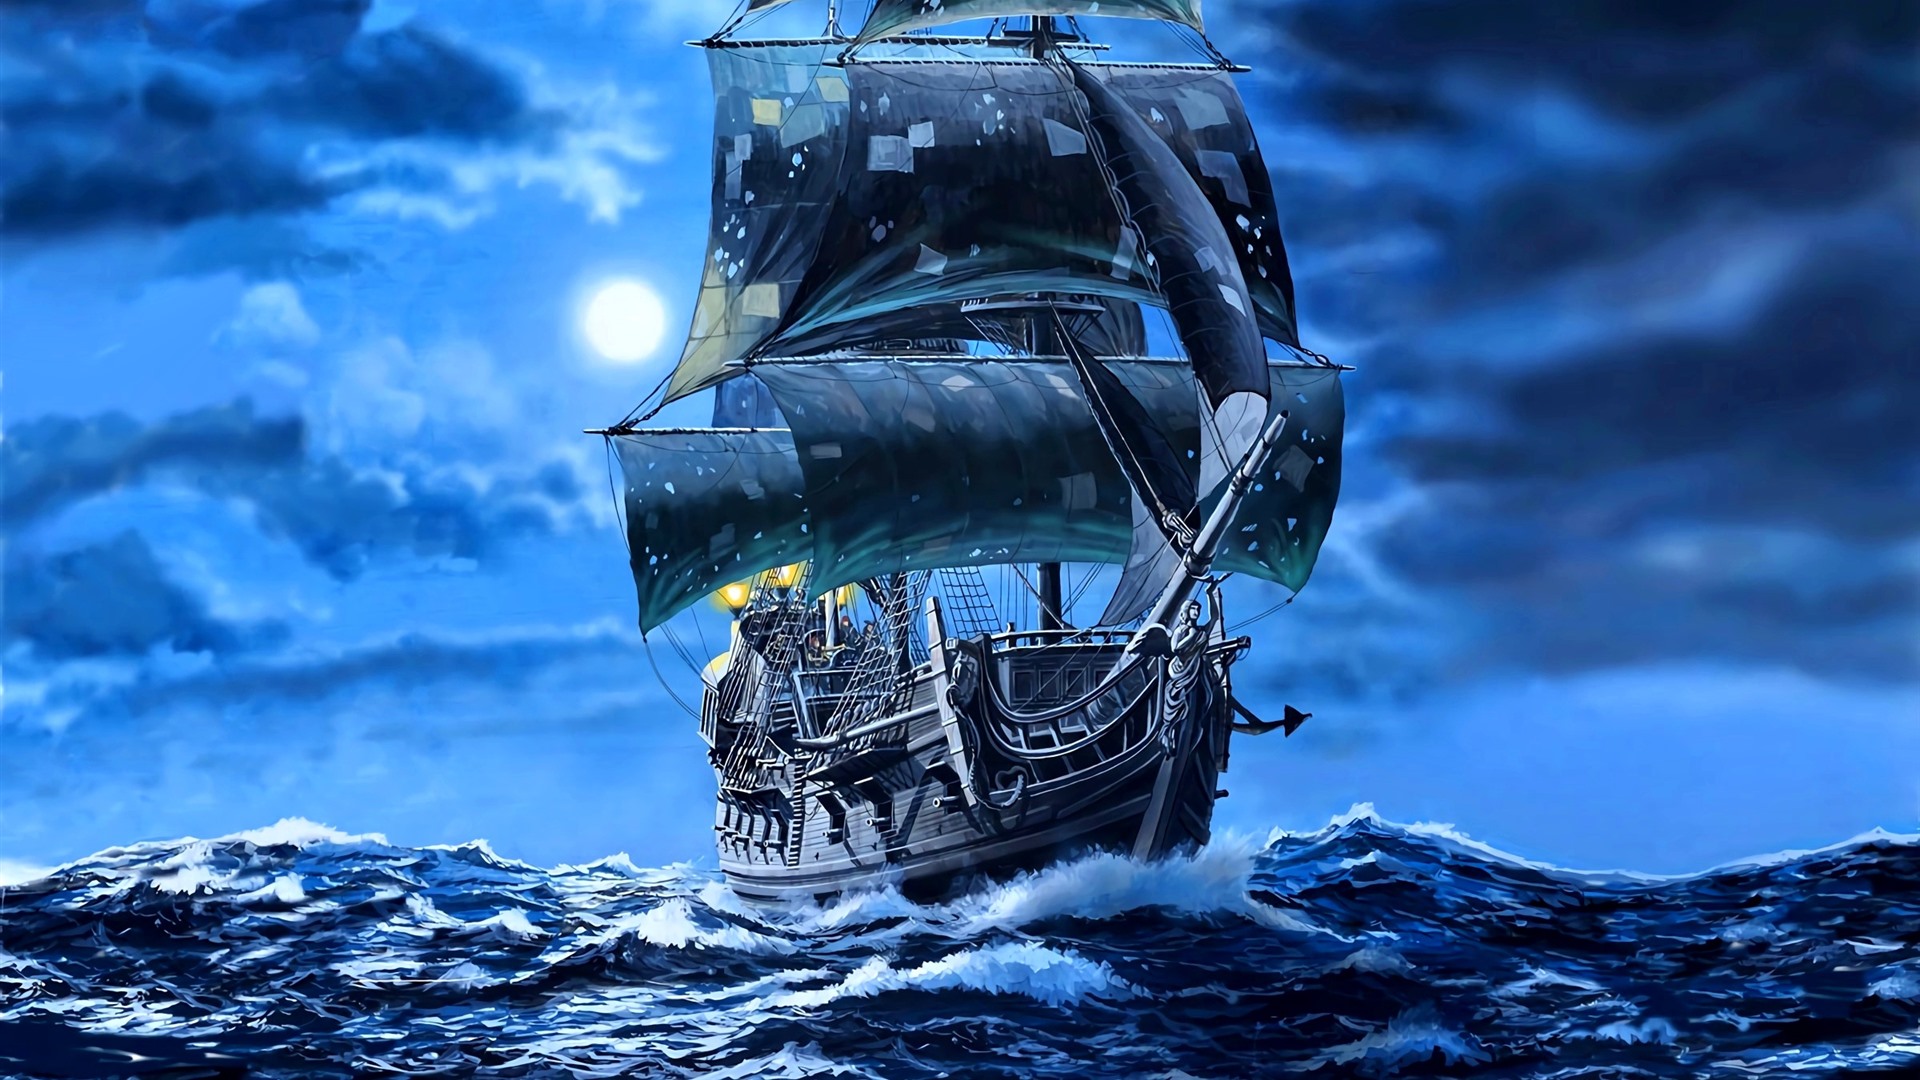 black pearl ship hd wallpaper,vehicle,galleon,manila galleon,ship,watercraft